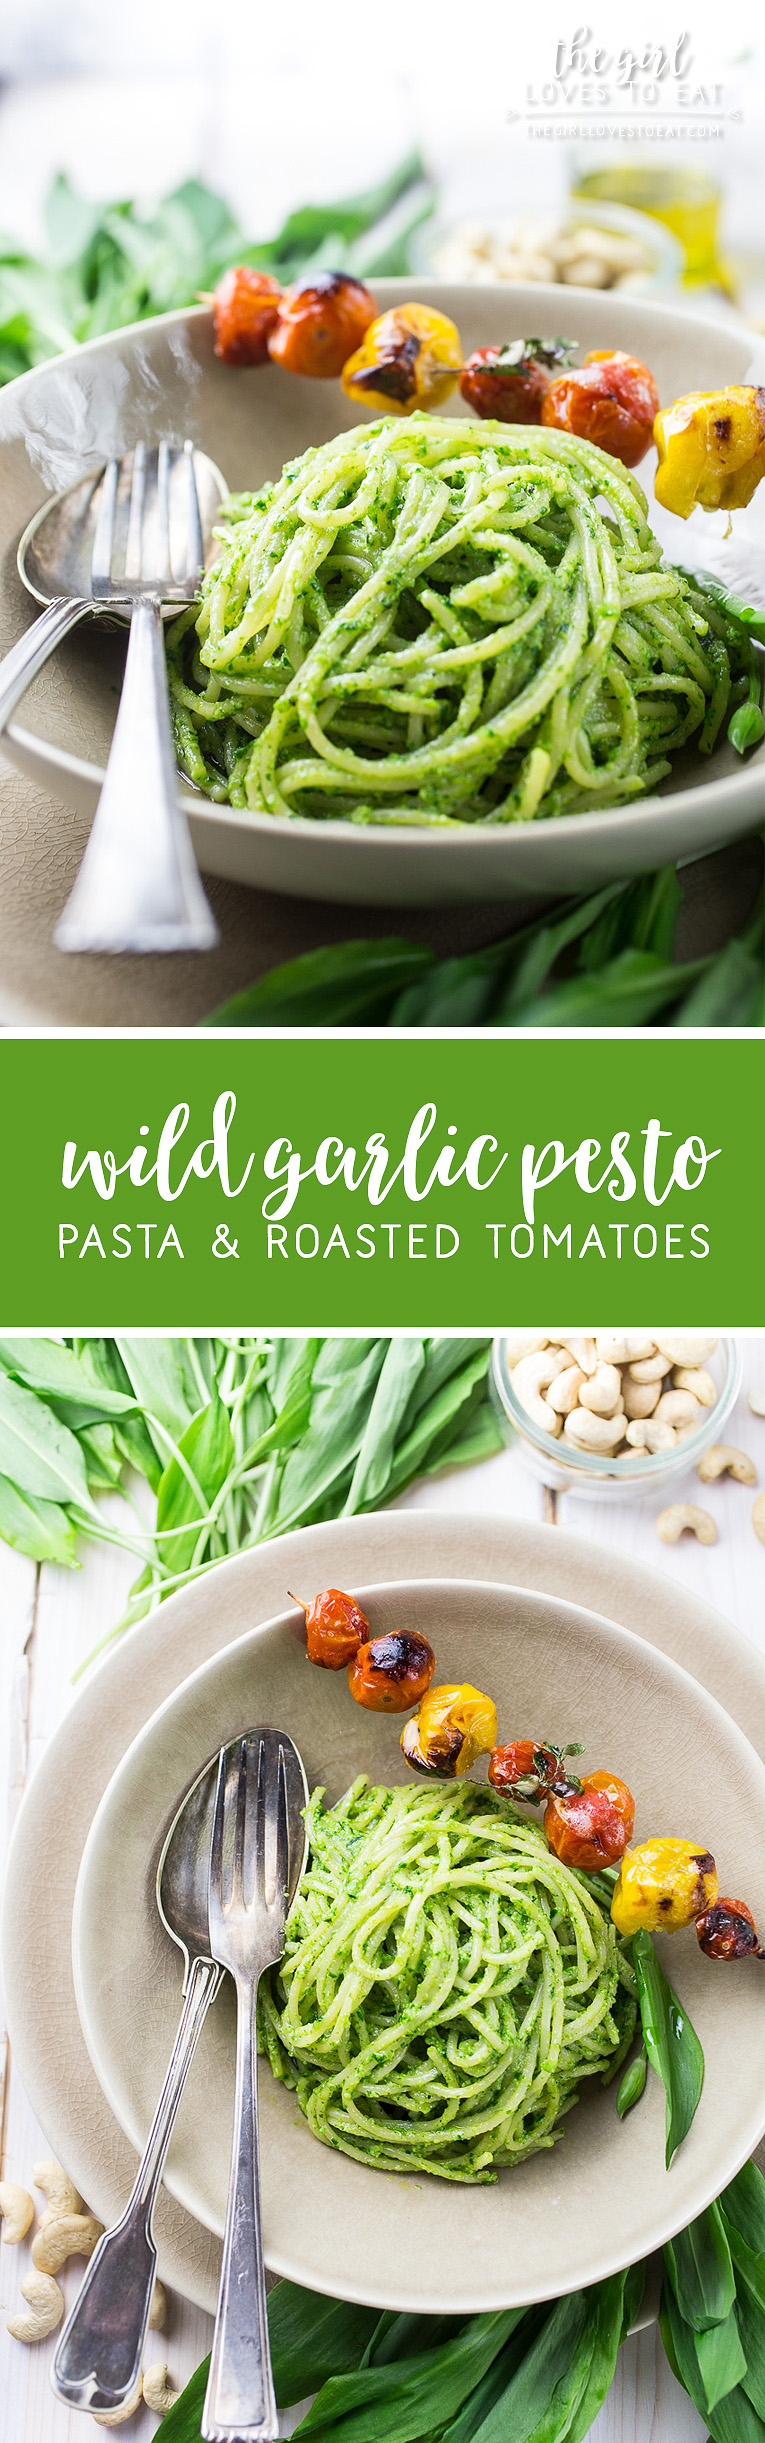 Wild garlic pesto pasta { thegirllovestoeat.com }